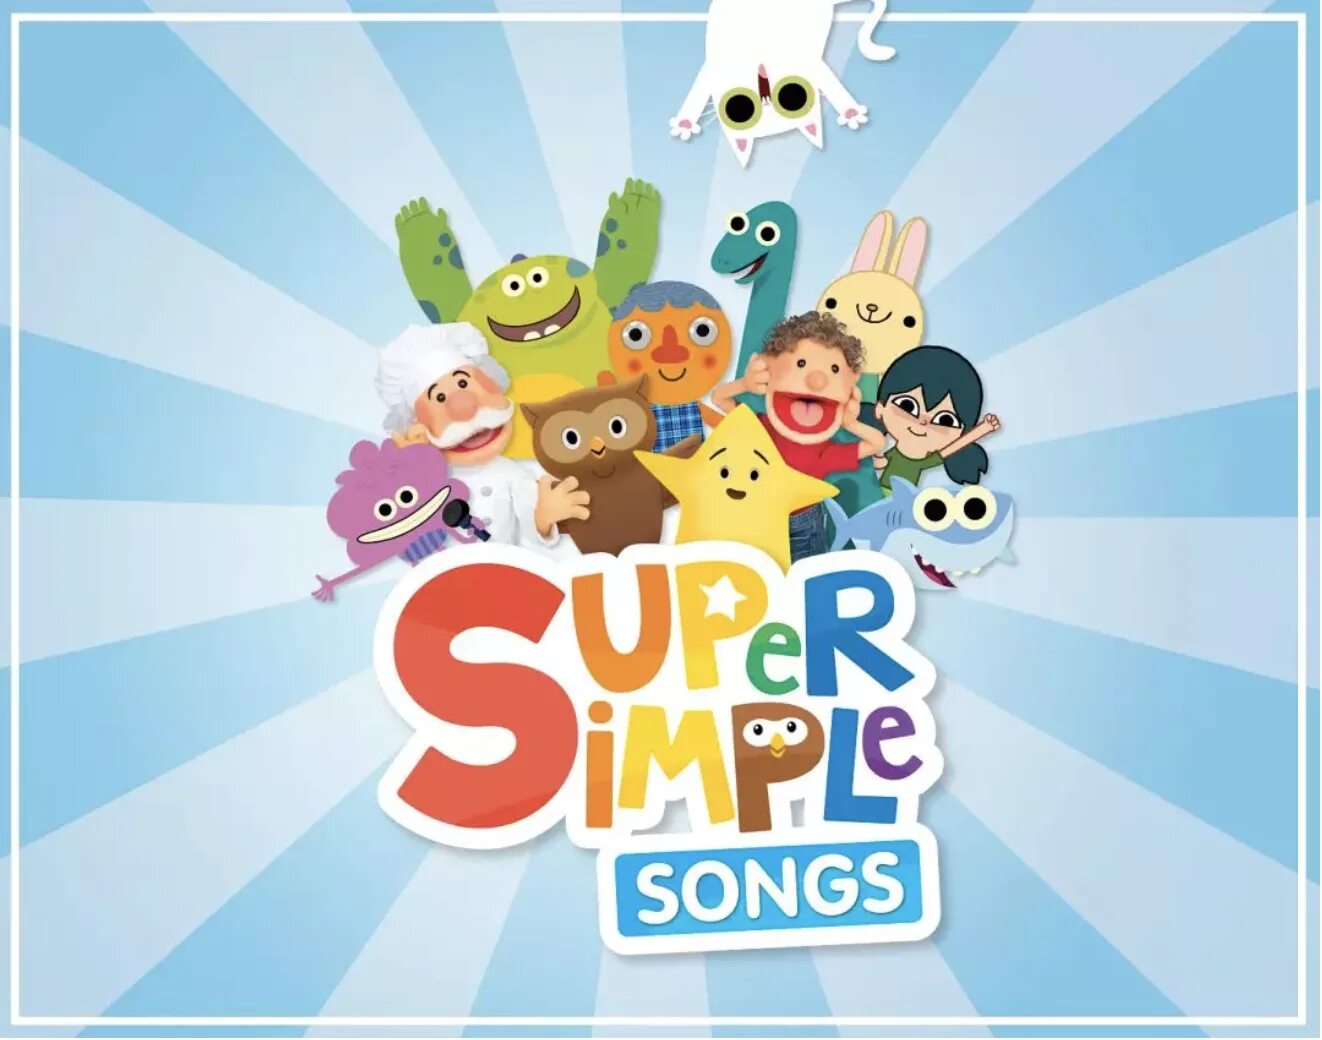 Симпл Сонг. Simple Songs. Super simple. Super simple Songs Kids Songs. Super simple songs bye